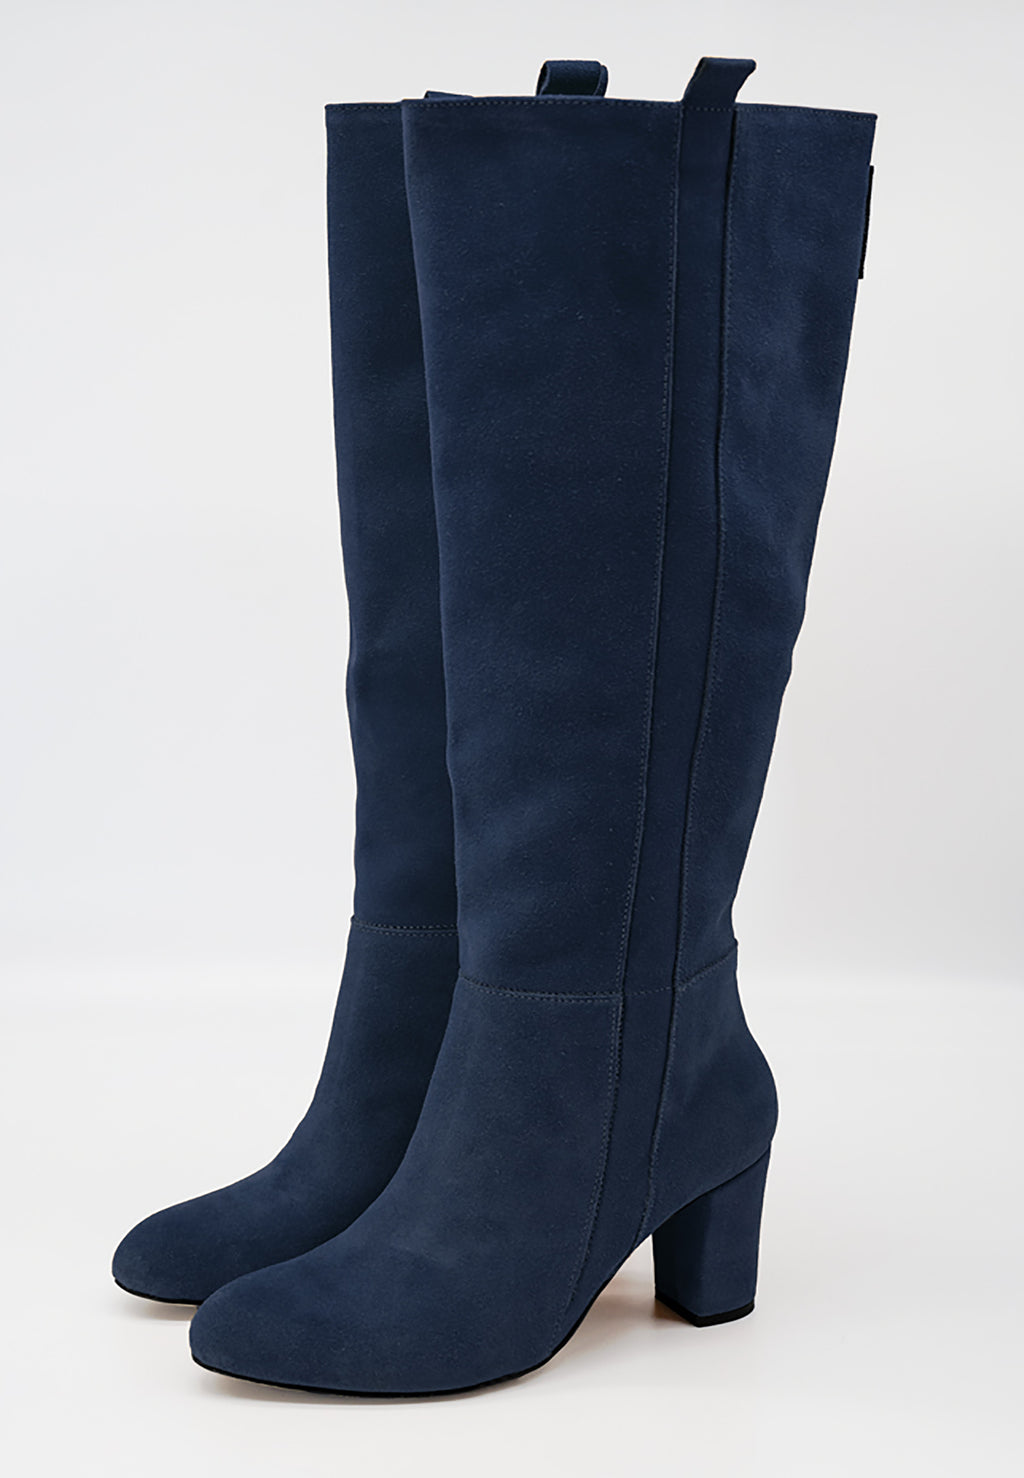 navy blue knee high boots